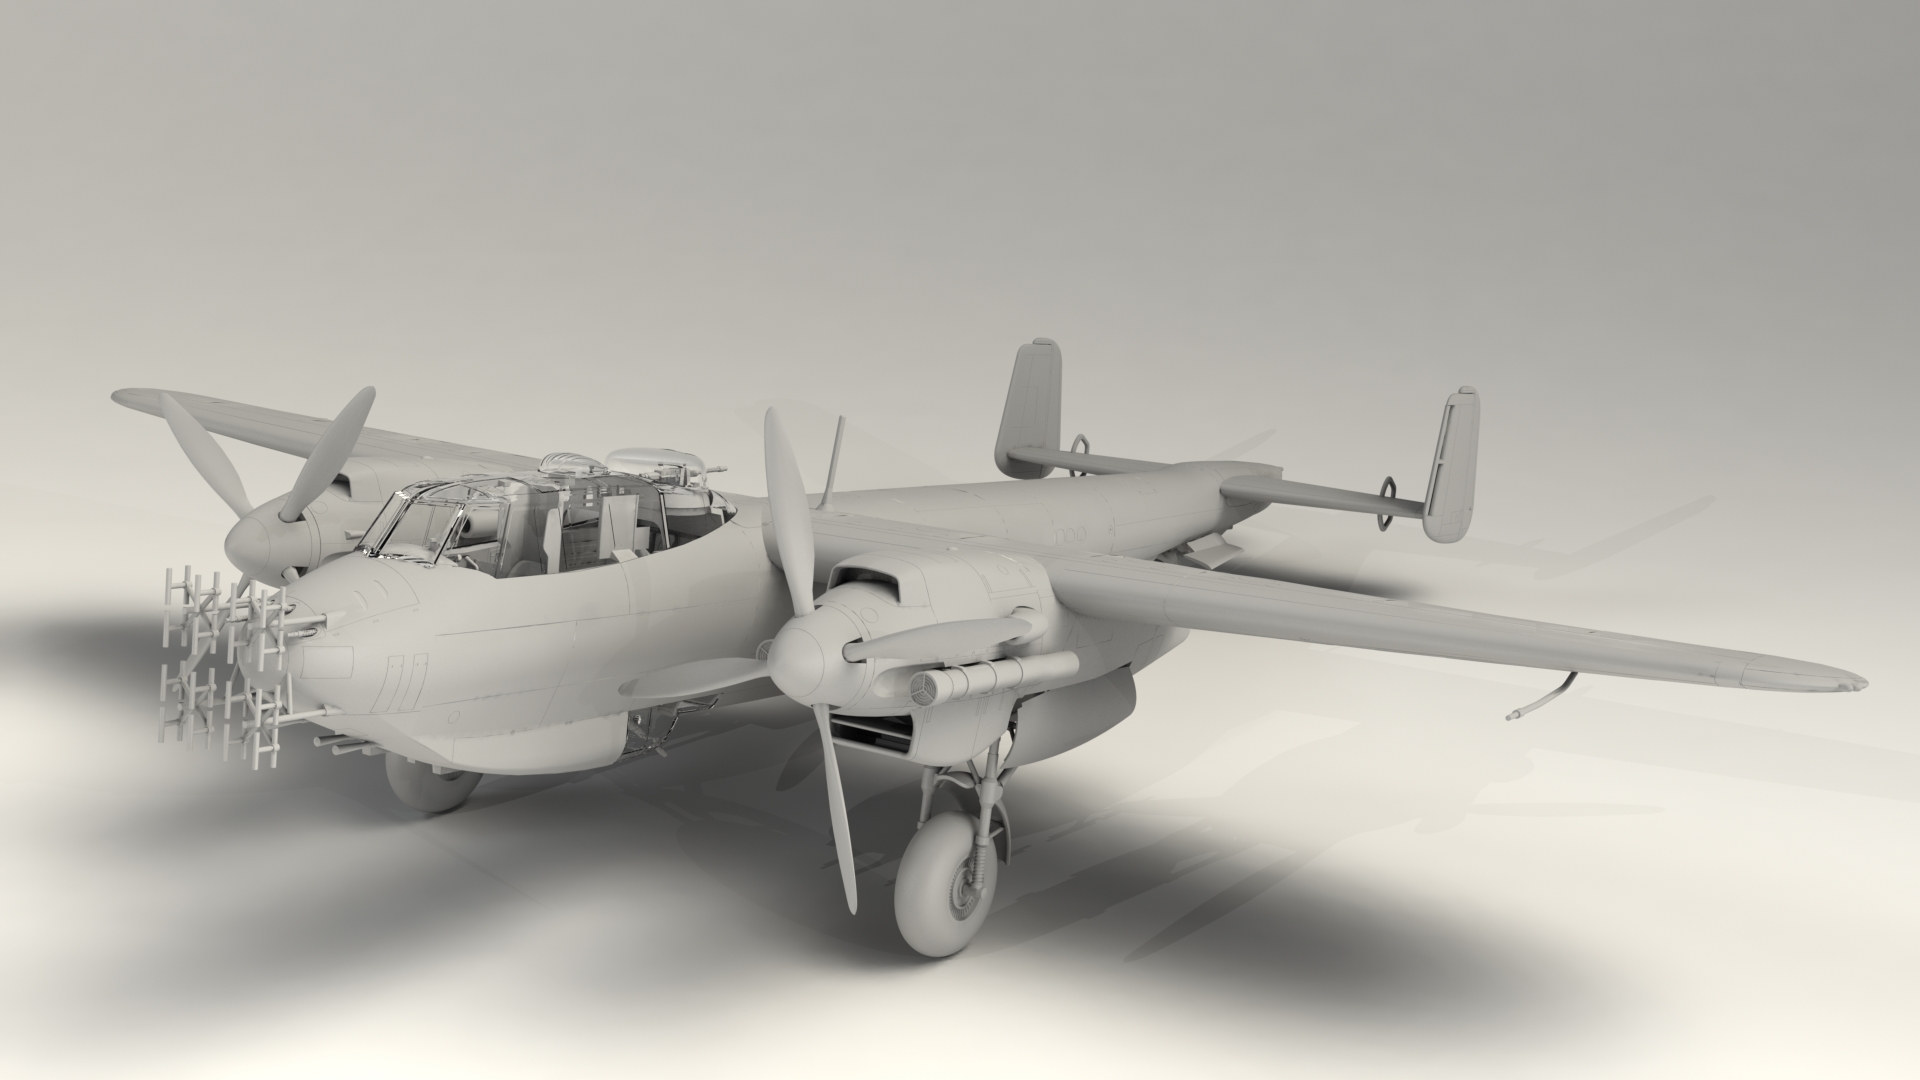 1/48 Do 217N-1, Германский ночной истребитель ІІ МВ #48271 / Do 217N-1, WWII German Night Fighter (100% new molds)